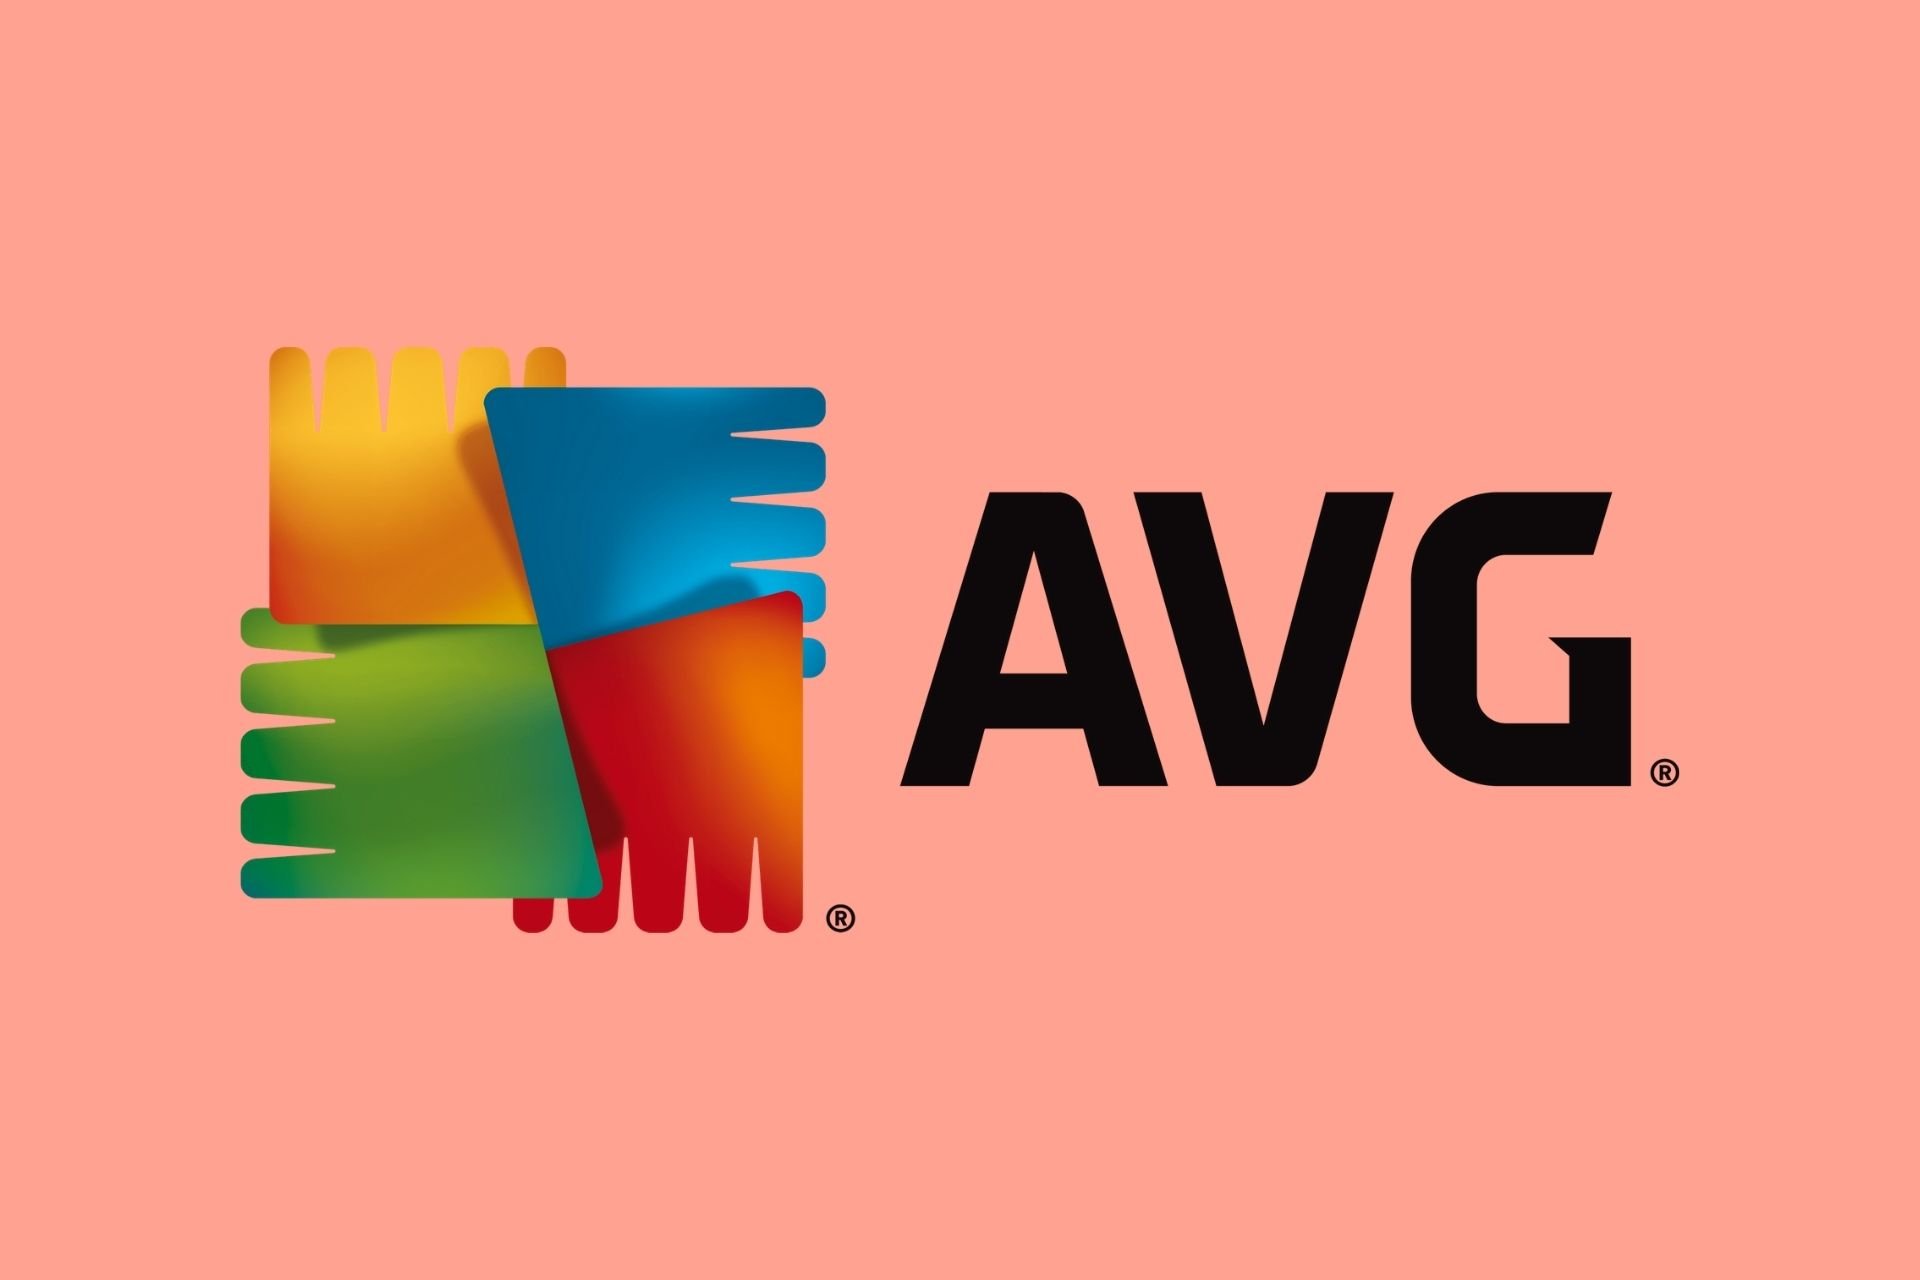 How to download AVG Antivirus Free for Windows 10